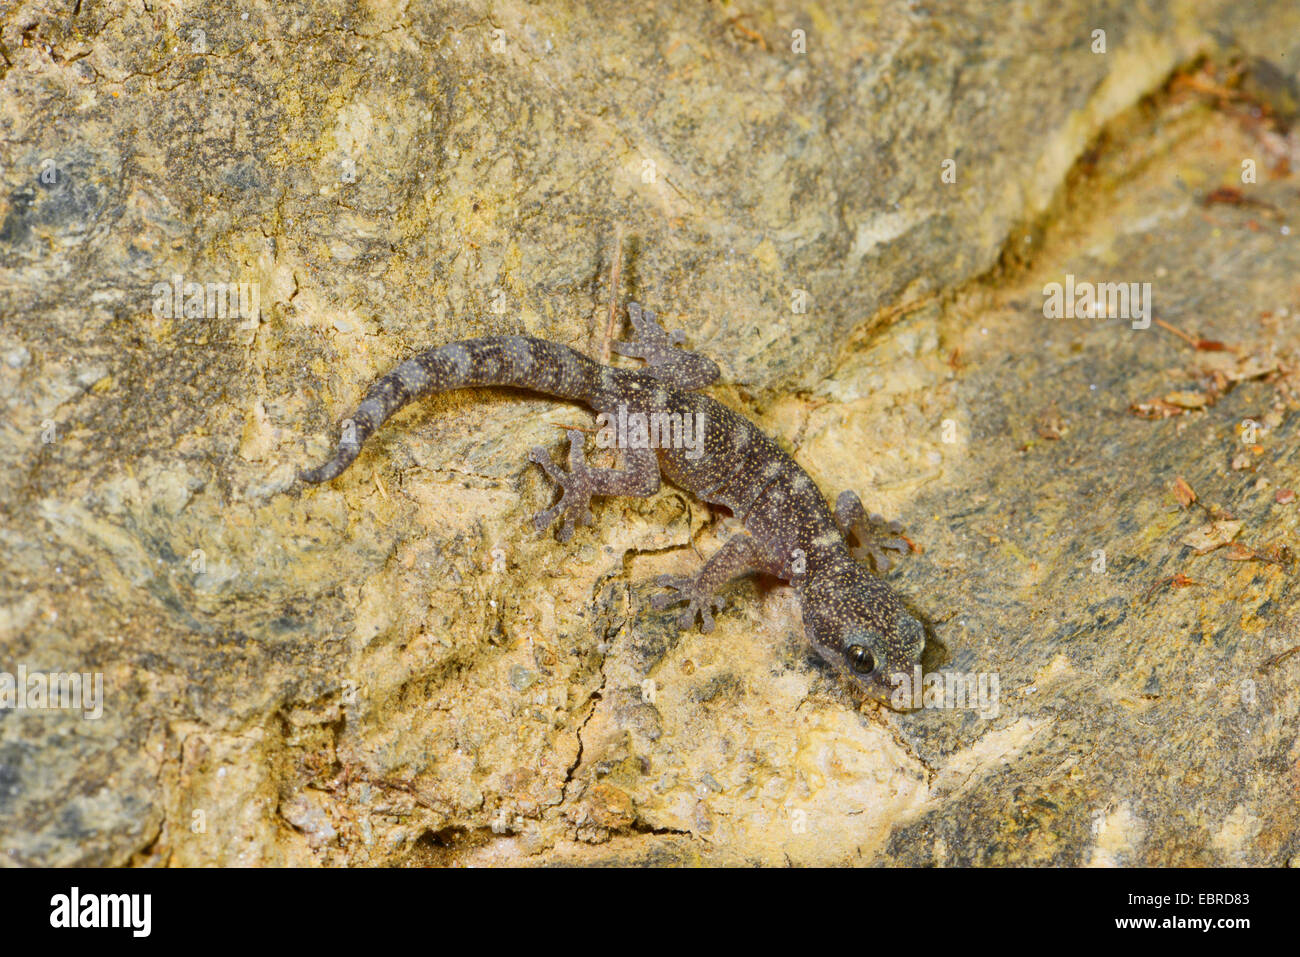 European leaf-toed gecko (Phyllodactylus europaeus), at a wall, France, Corsica Stock Photo